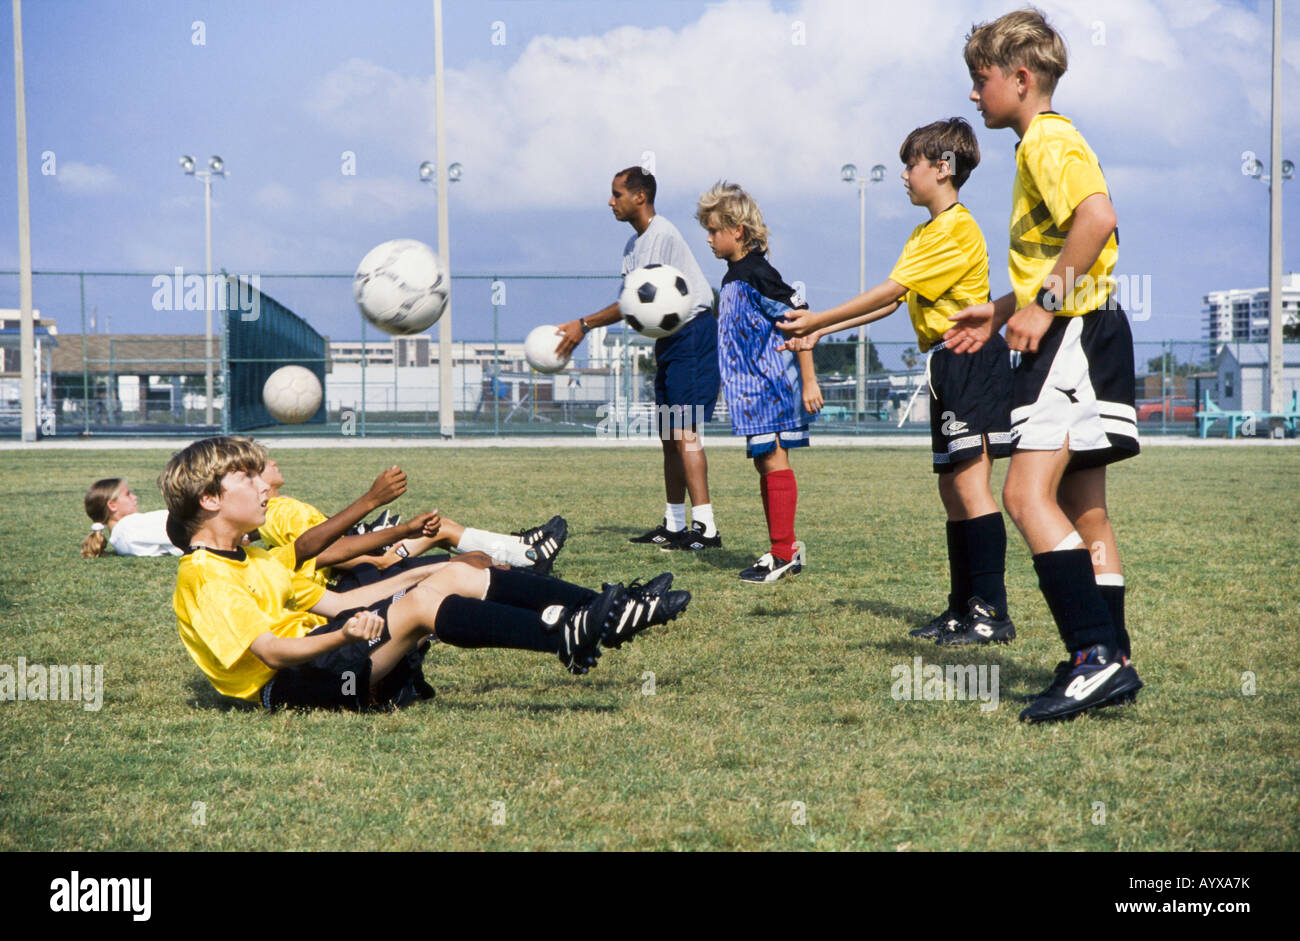 Kids soccer team, girls and boys together, with coach teaching skills, teamwork, teamspirit, Melbourne, Florida Stock Photo